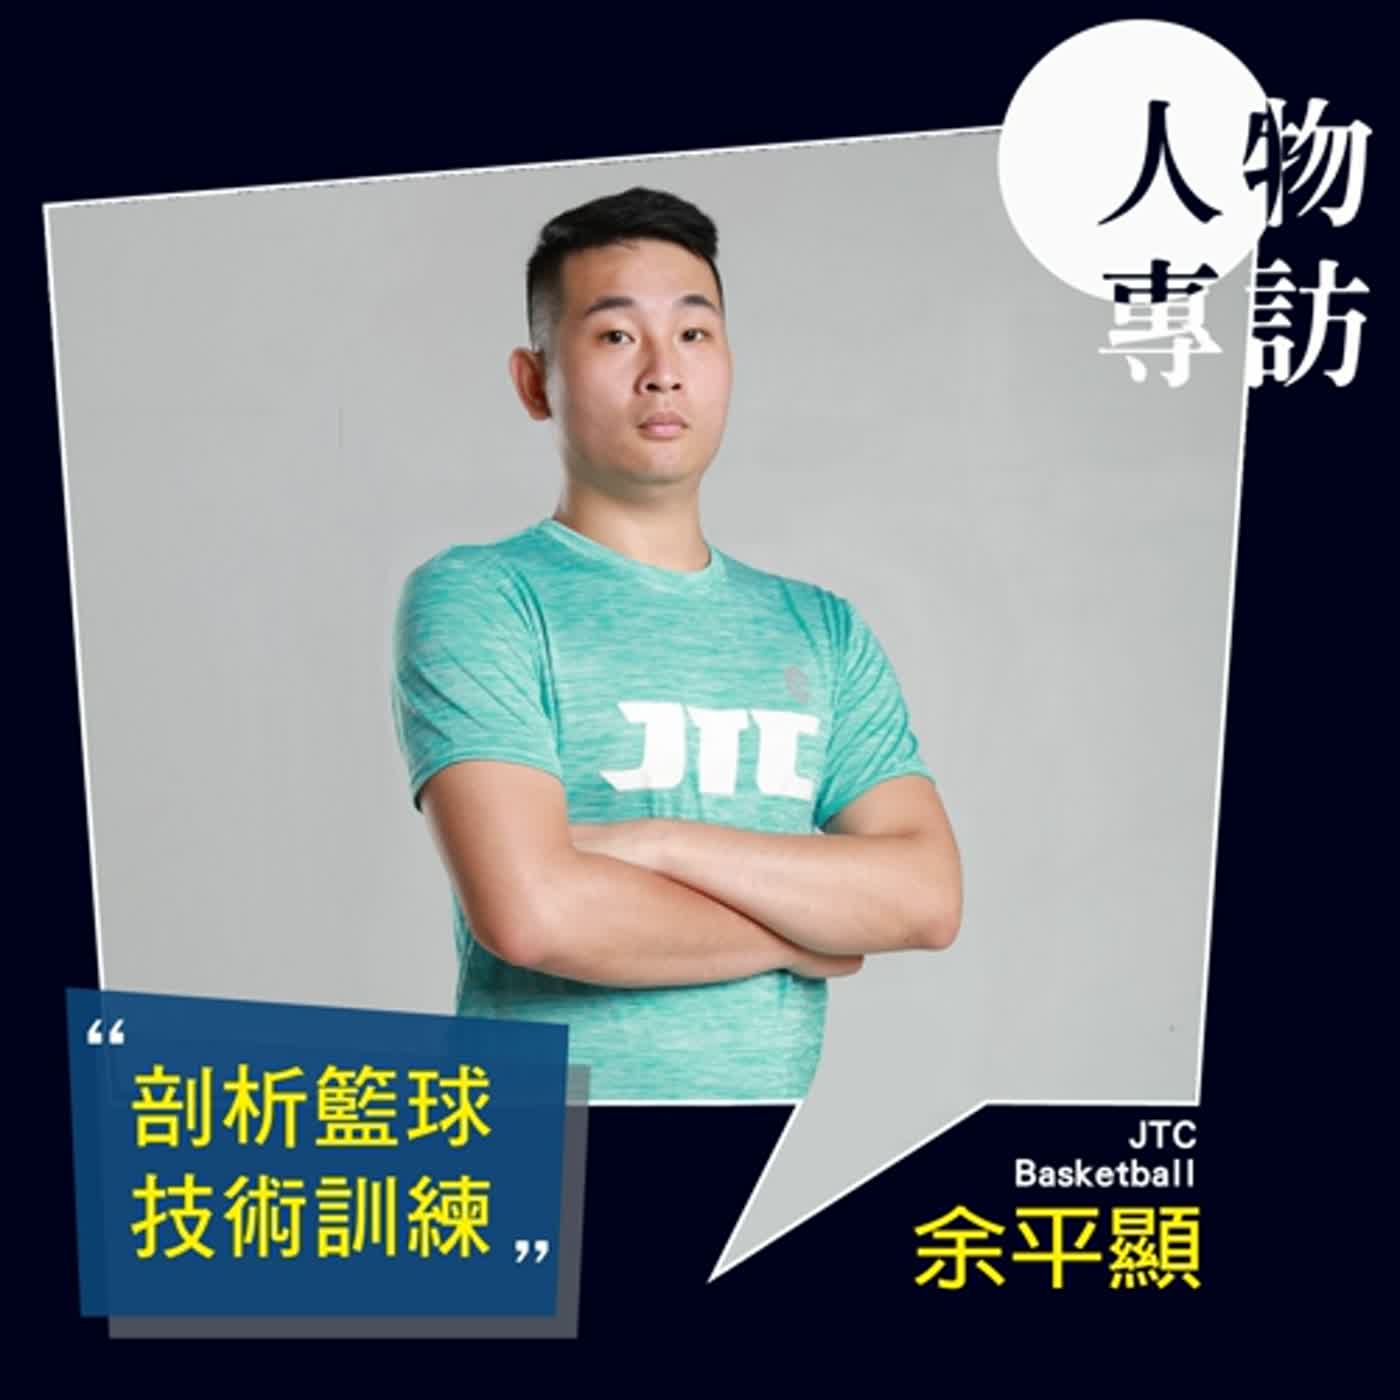 【S3E11】剖析籃球技術訓練 feat. JTC basketball 余平顥 (Jack)